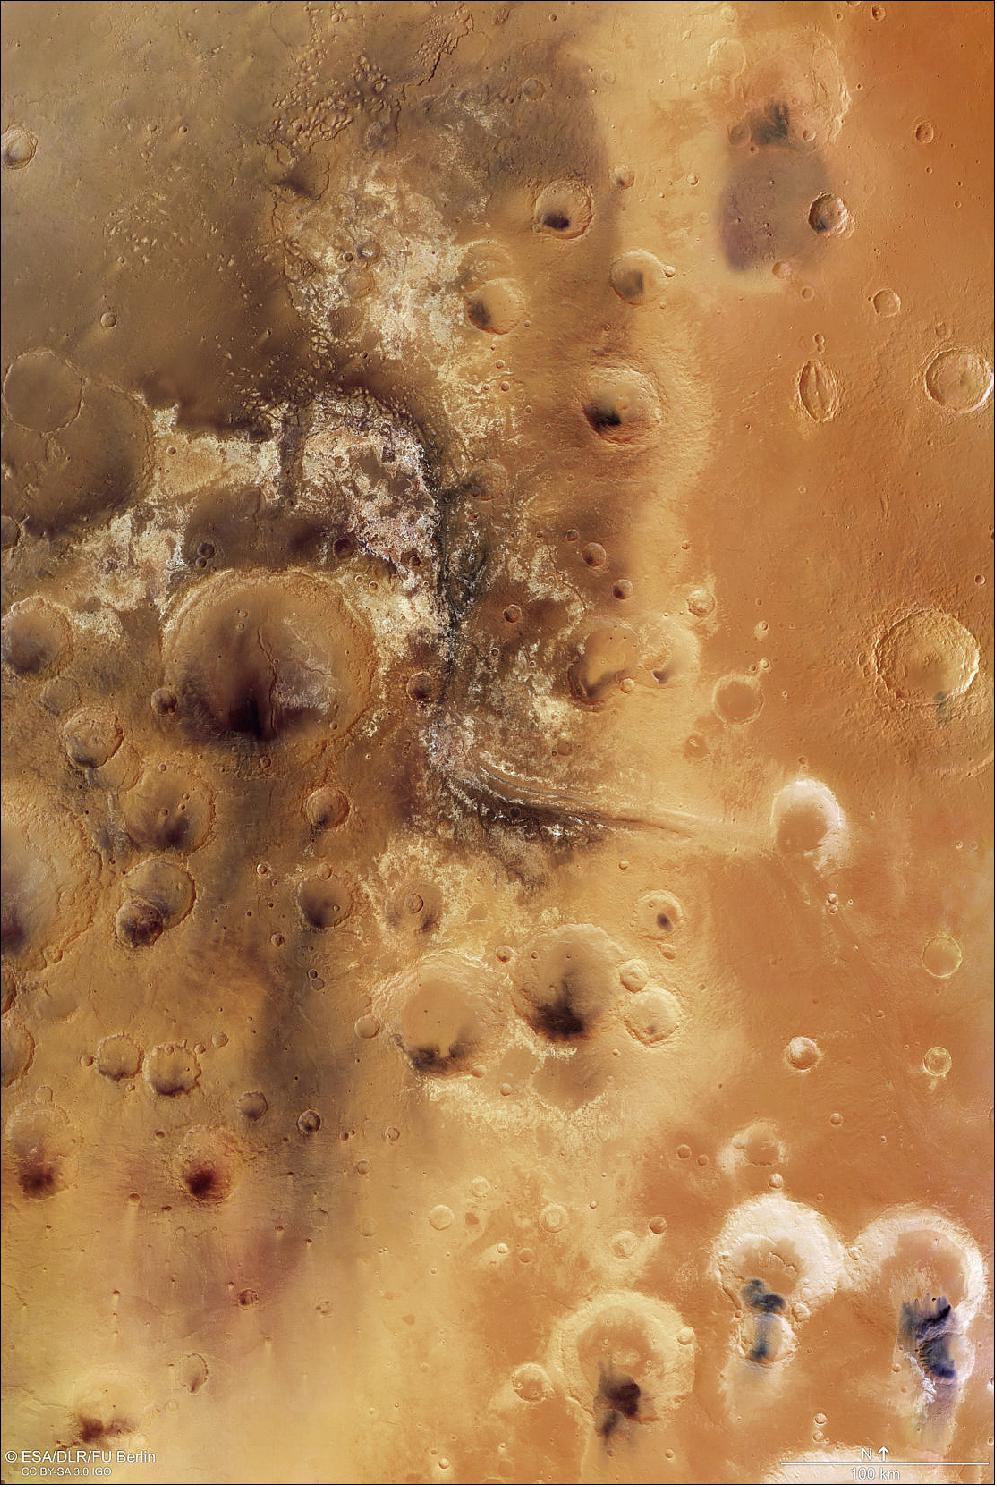 Figure 105: Mawrth Vallis martian mosaic (image credit: ESA/DLR/FU Berlin, CC BY-SA 3.0 IGO)